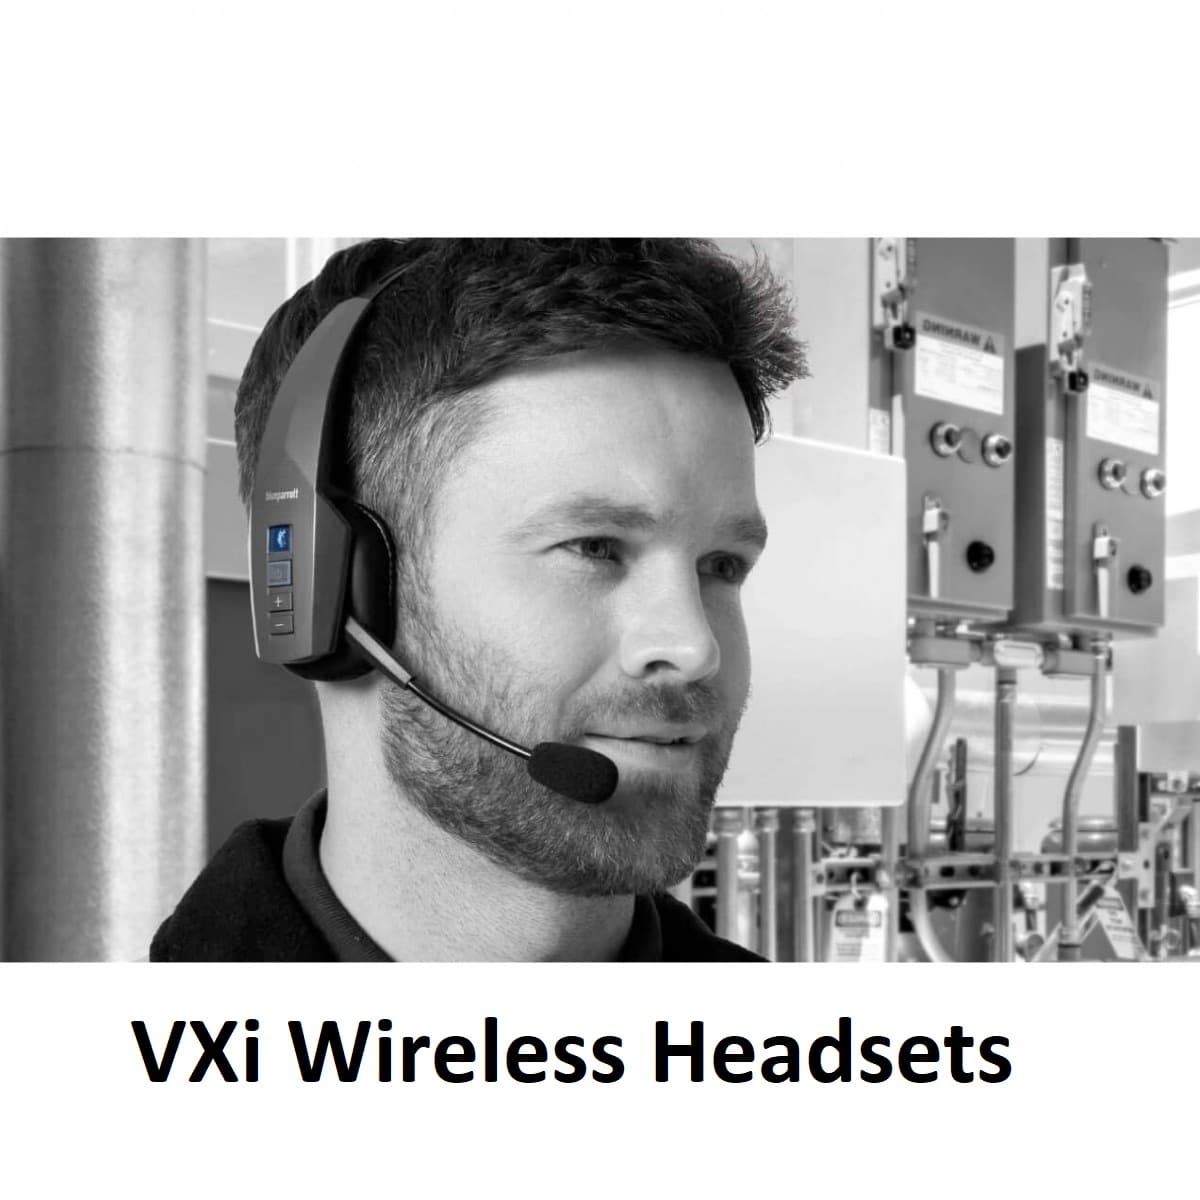 VXI Wireless Headsets